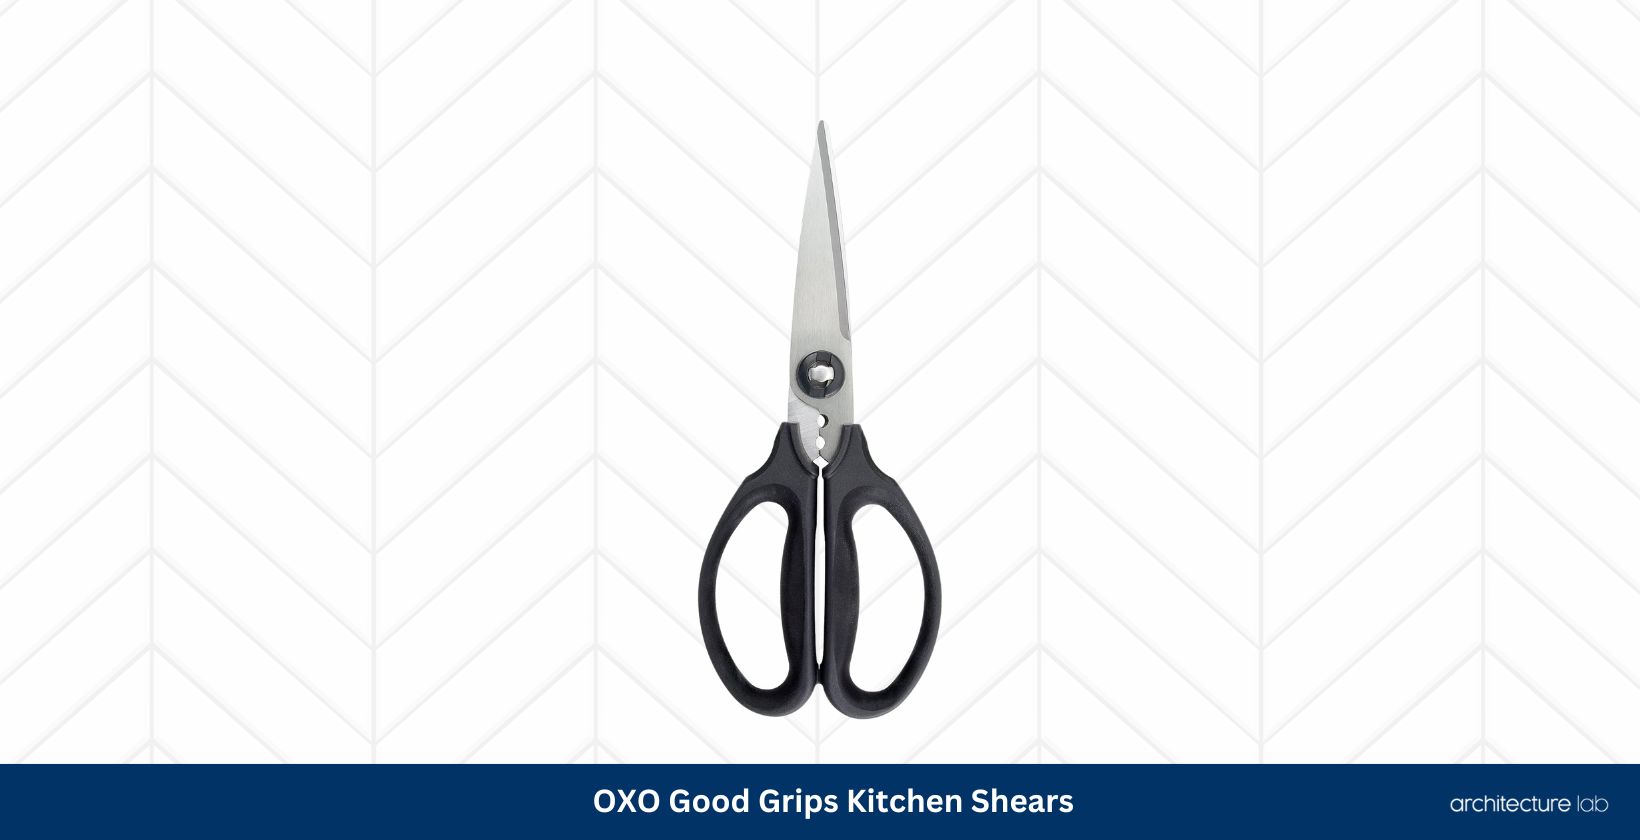 Oxo good grips kitchen shears0